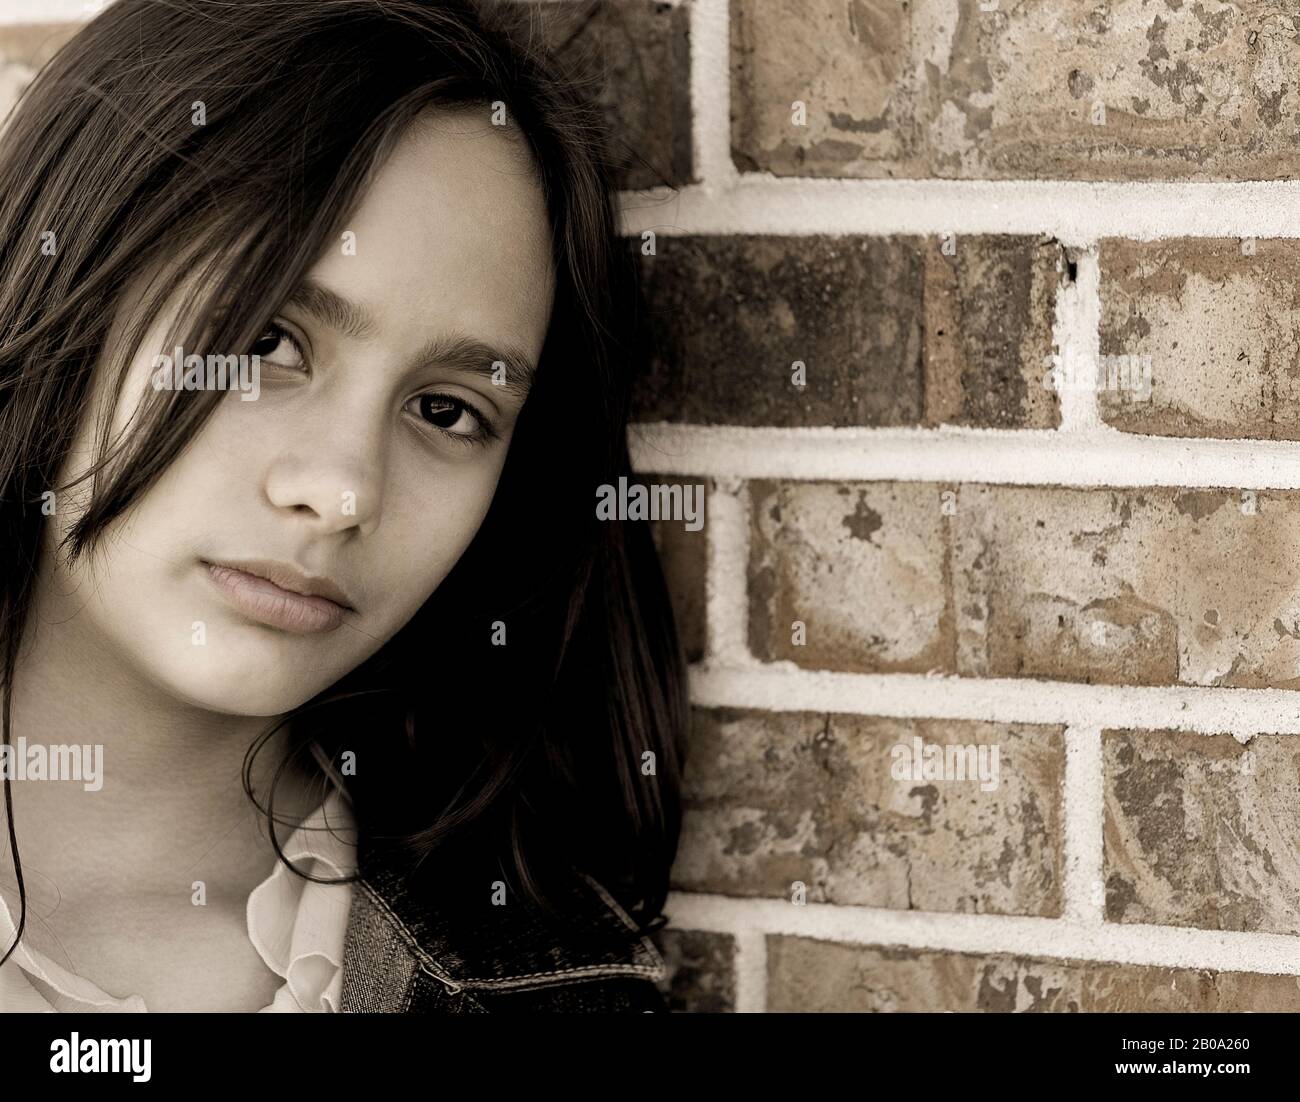 A teenage Hispanic girl with dark brown hair and eyes leaning on a brick wall. Engaged. Closeup. headshot Stock Photo